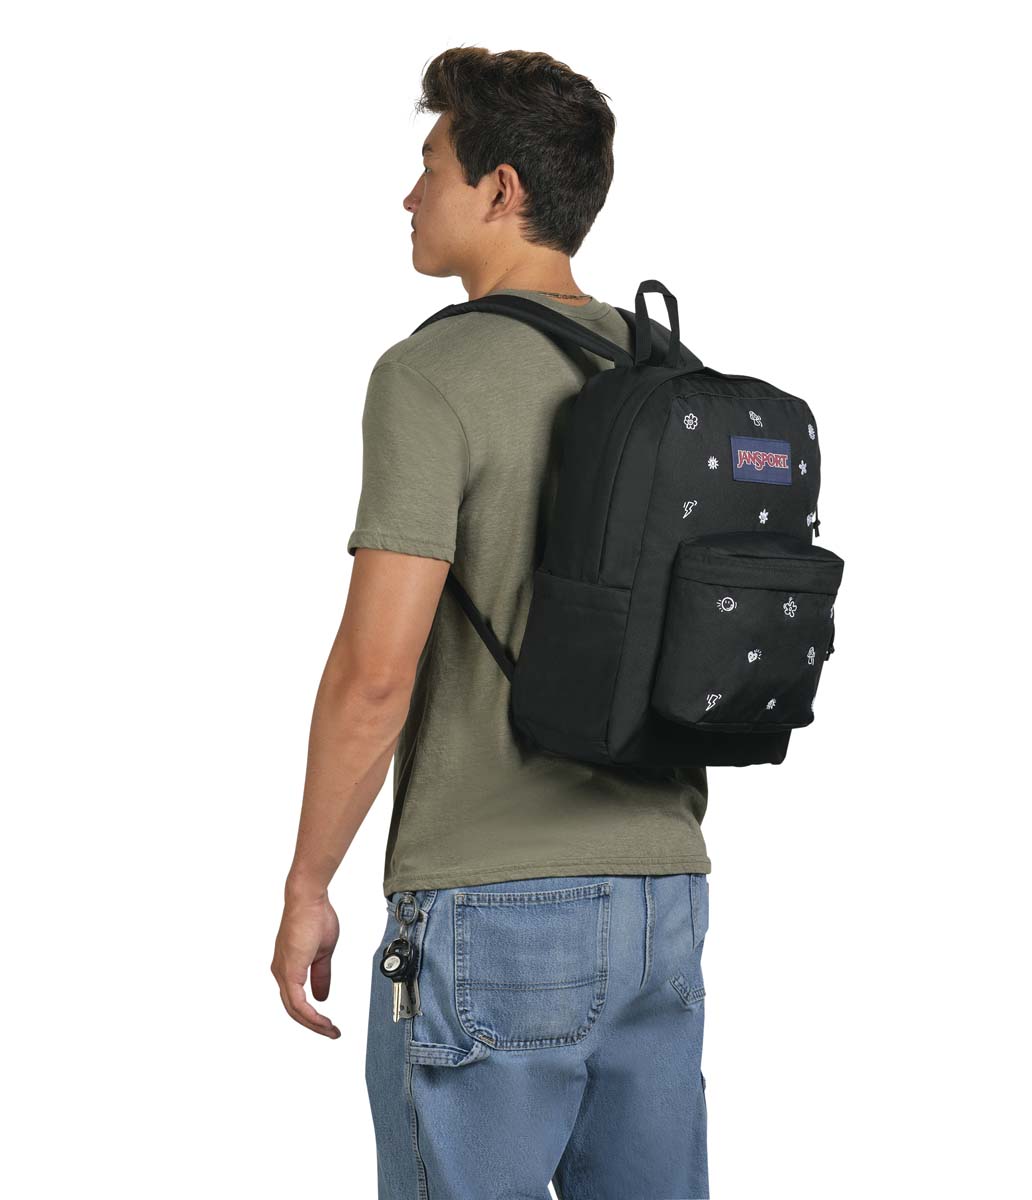 JanSport SuperBreak Plus FX Backpack - Kidcore Charms Black